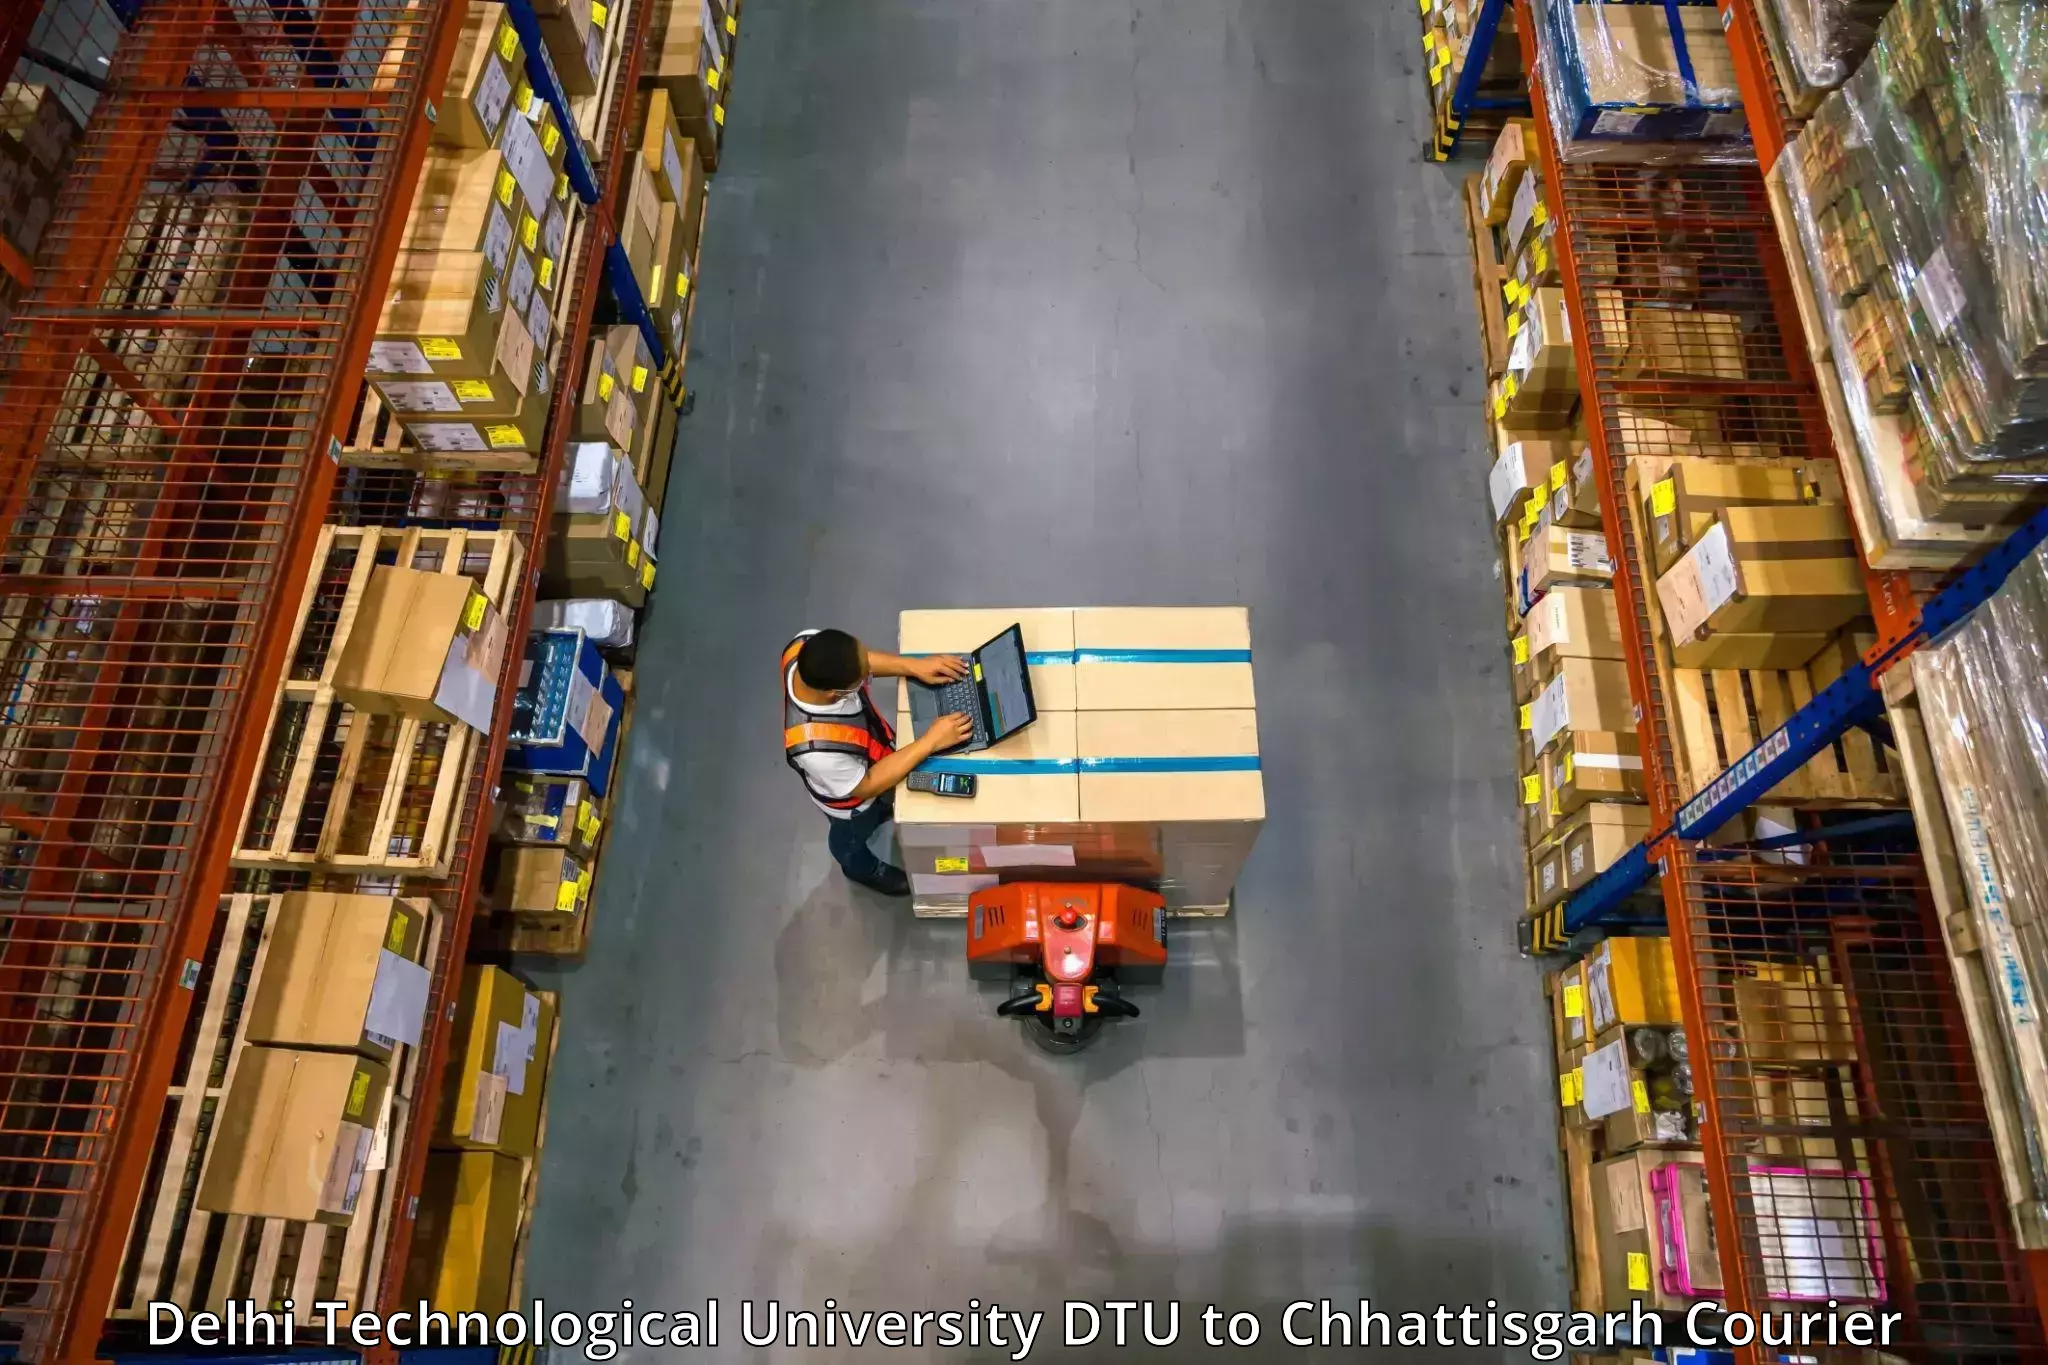 Furniture moving assistance Delhi Technological University DTU to Chhattisgarh